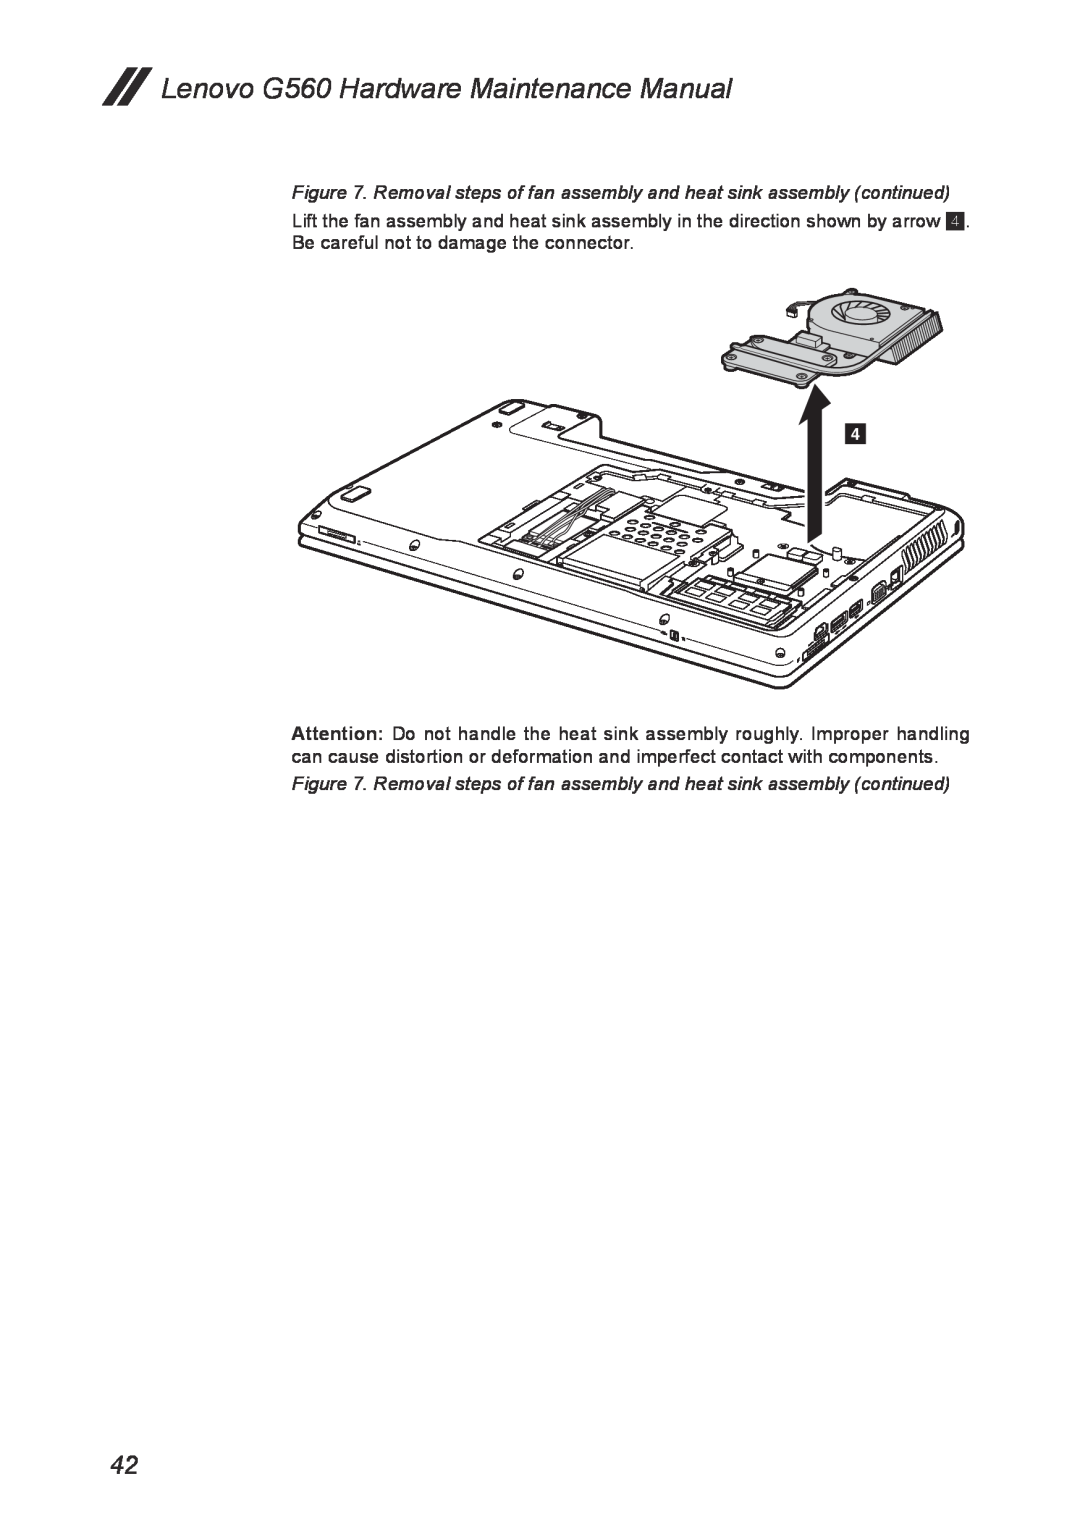 Lenovo manual Lenovo G560 Hardware Maintenance Manual 